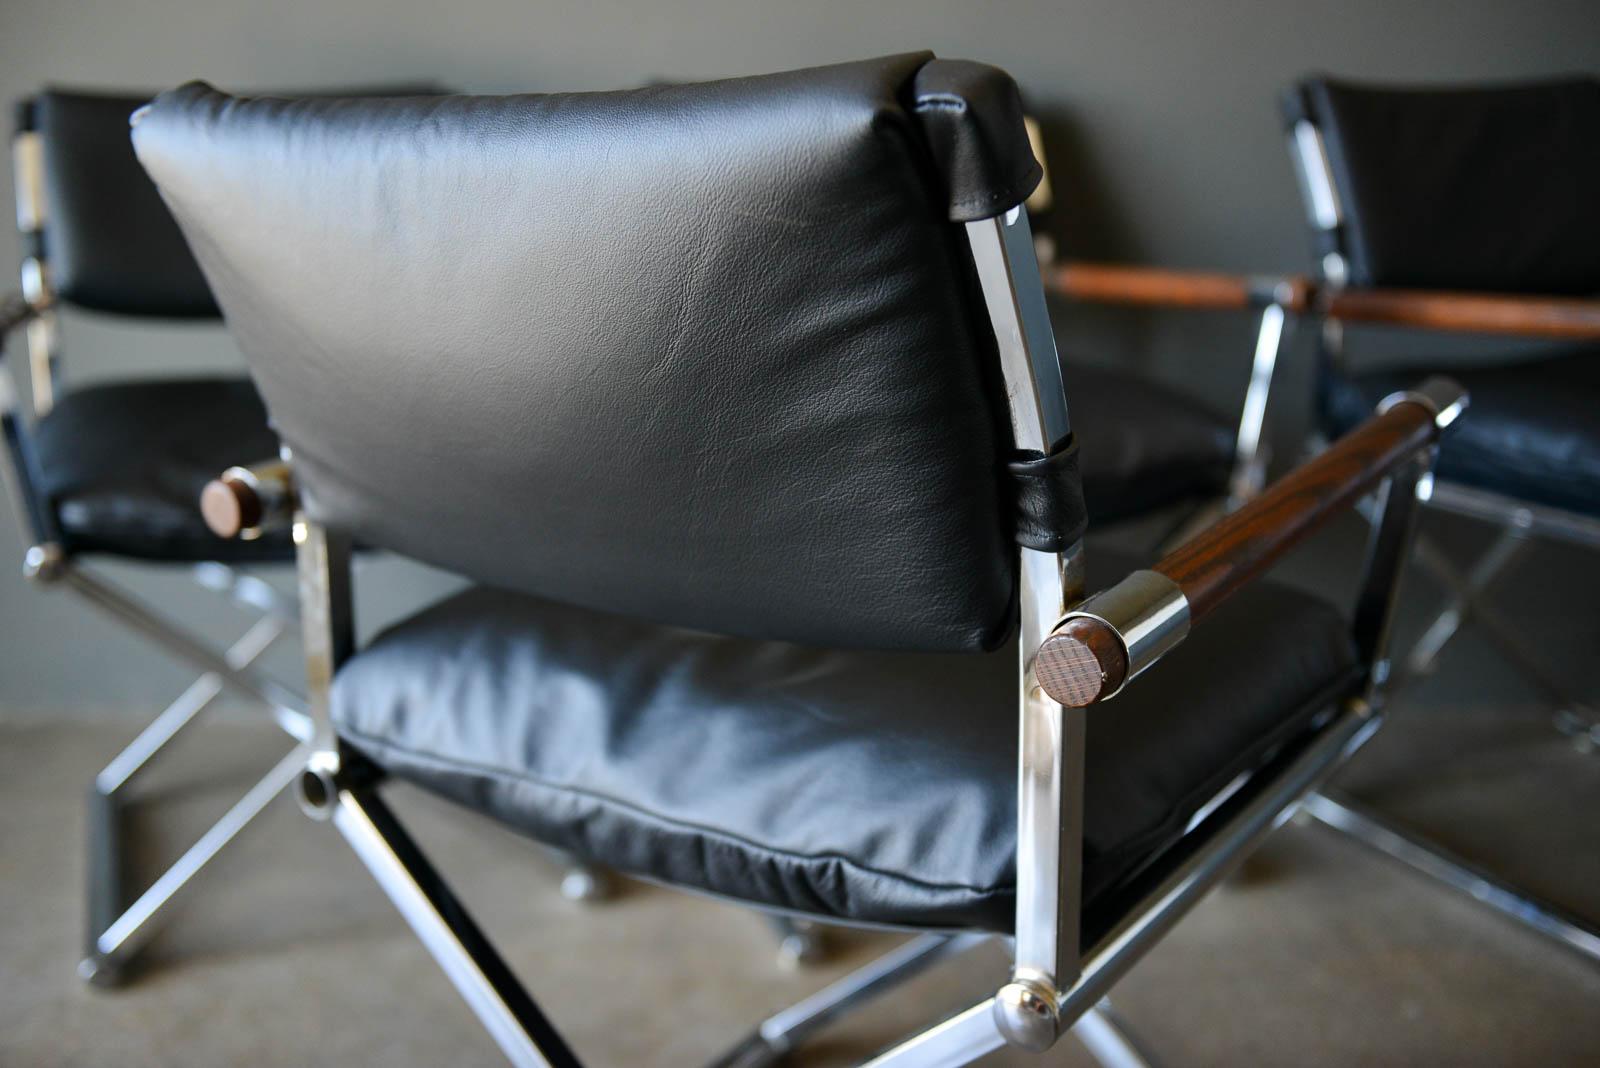 vintage leather directors chair